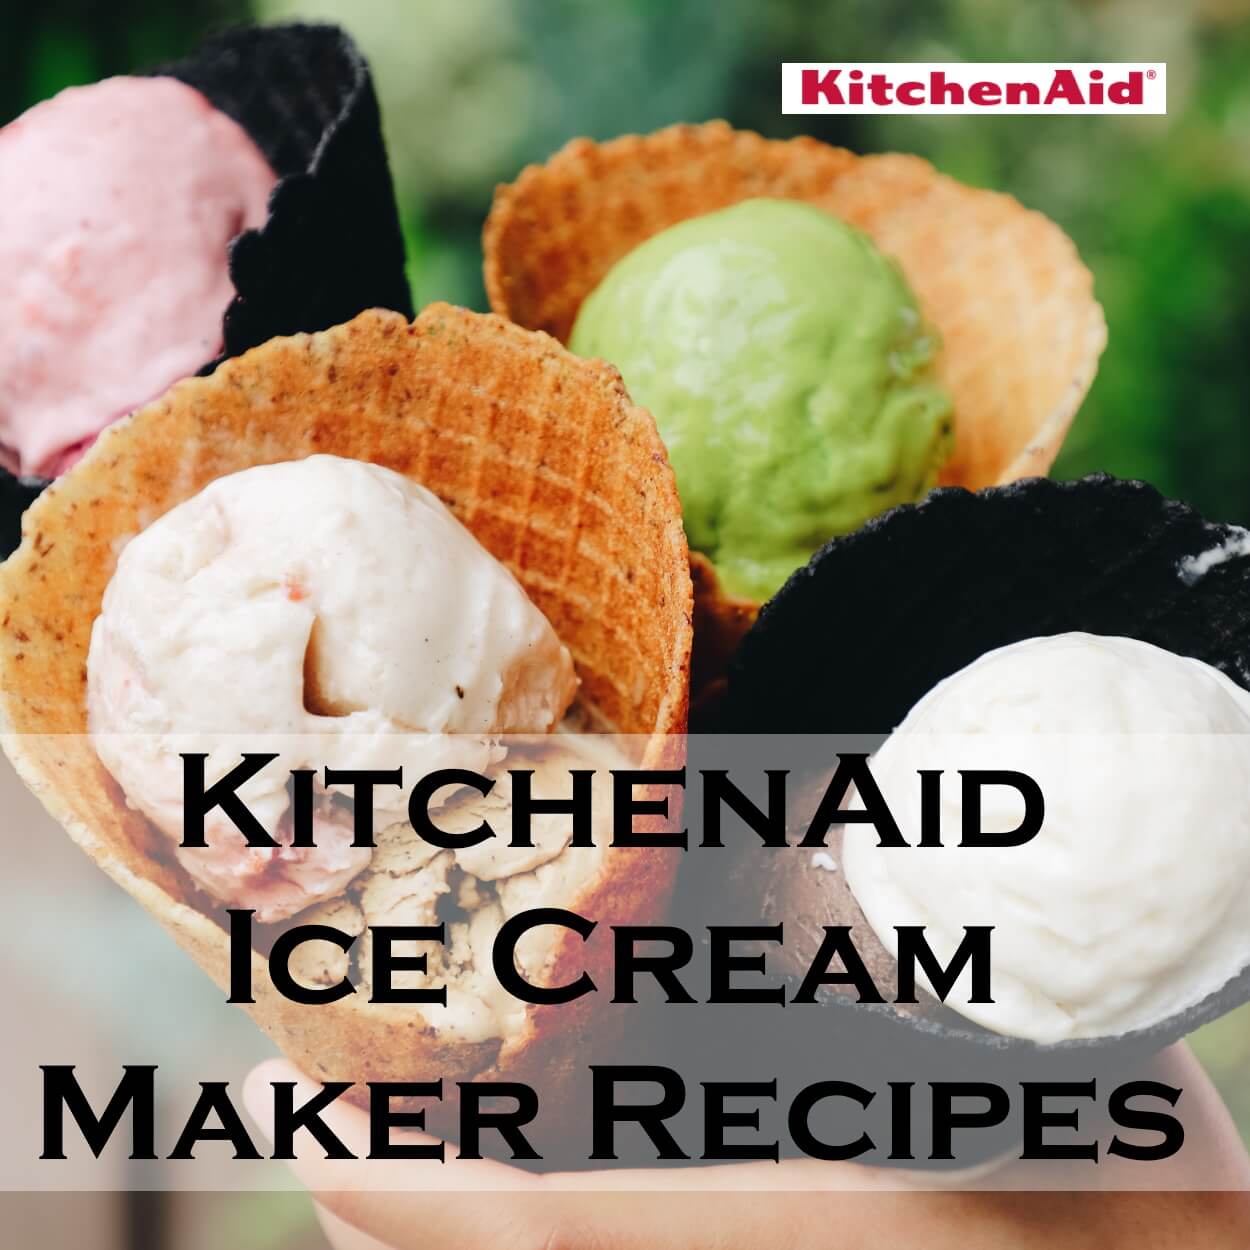 https://www.serving-ice-cream.com/wp-content/uploads/2020/02/KitchenAidIceCreamMakerRecipes.jpg